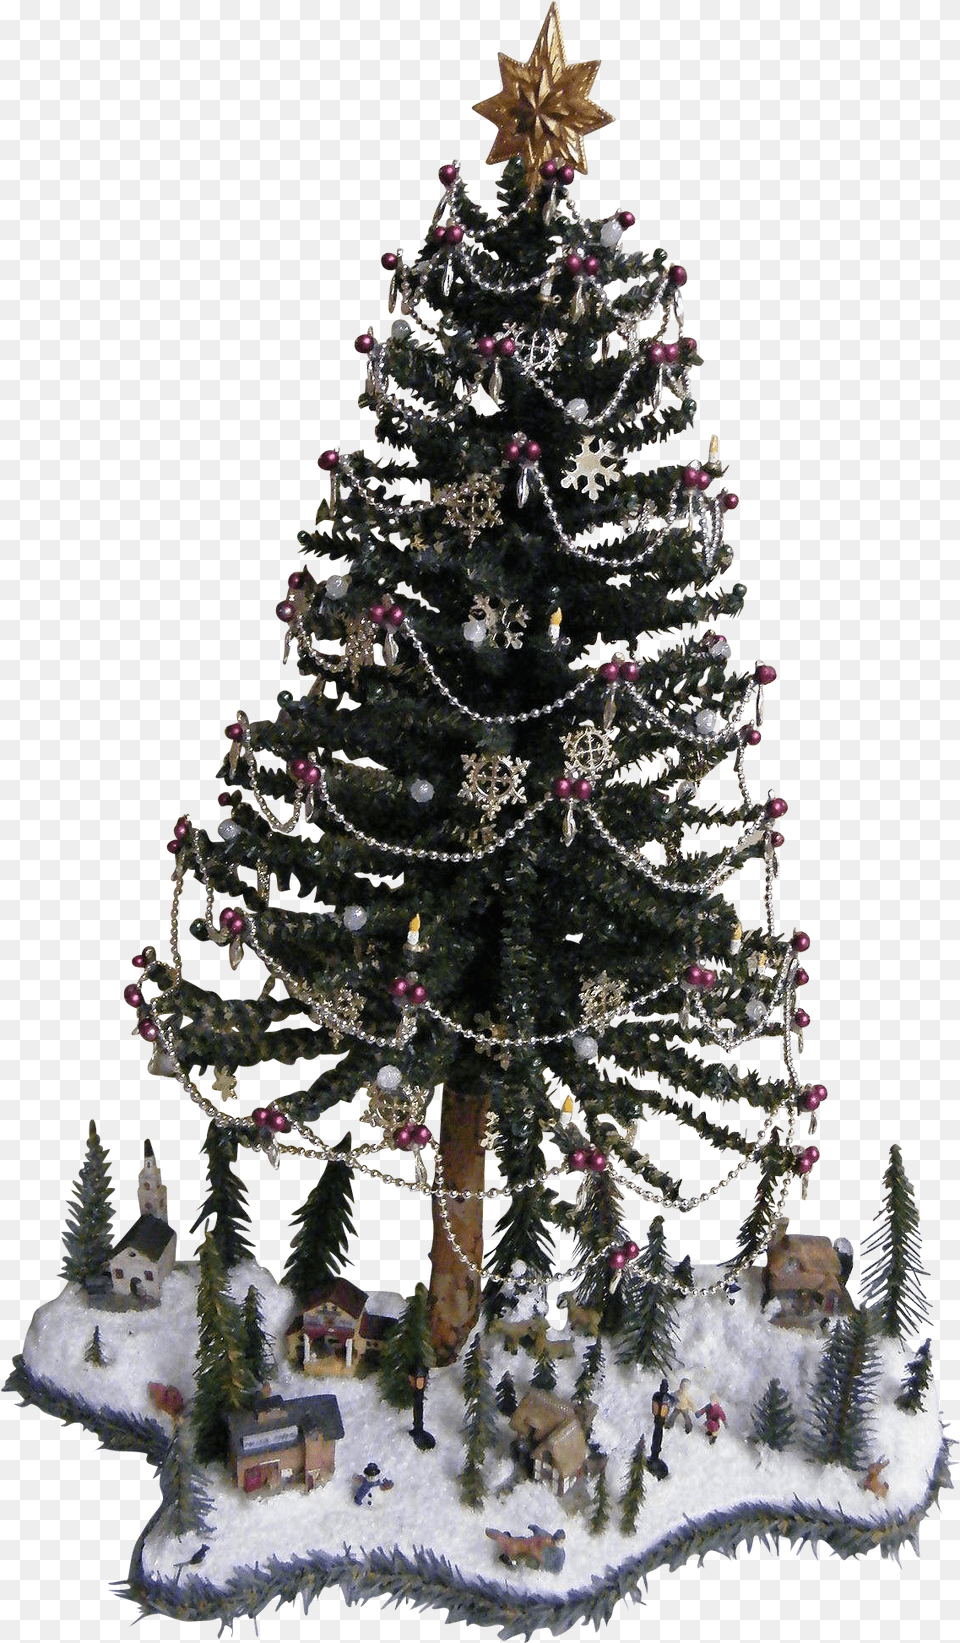 Christmas Tree With Christmas Village At Base Of Tree Christmas Tree, Plant, Christmas Decorations, Festival, Christmas Tree Png Image